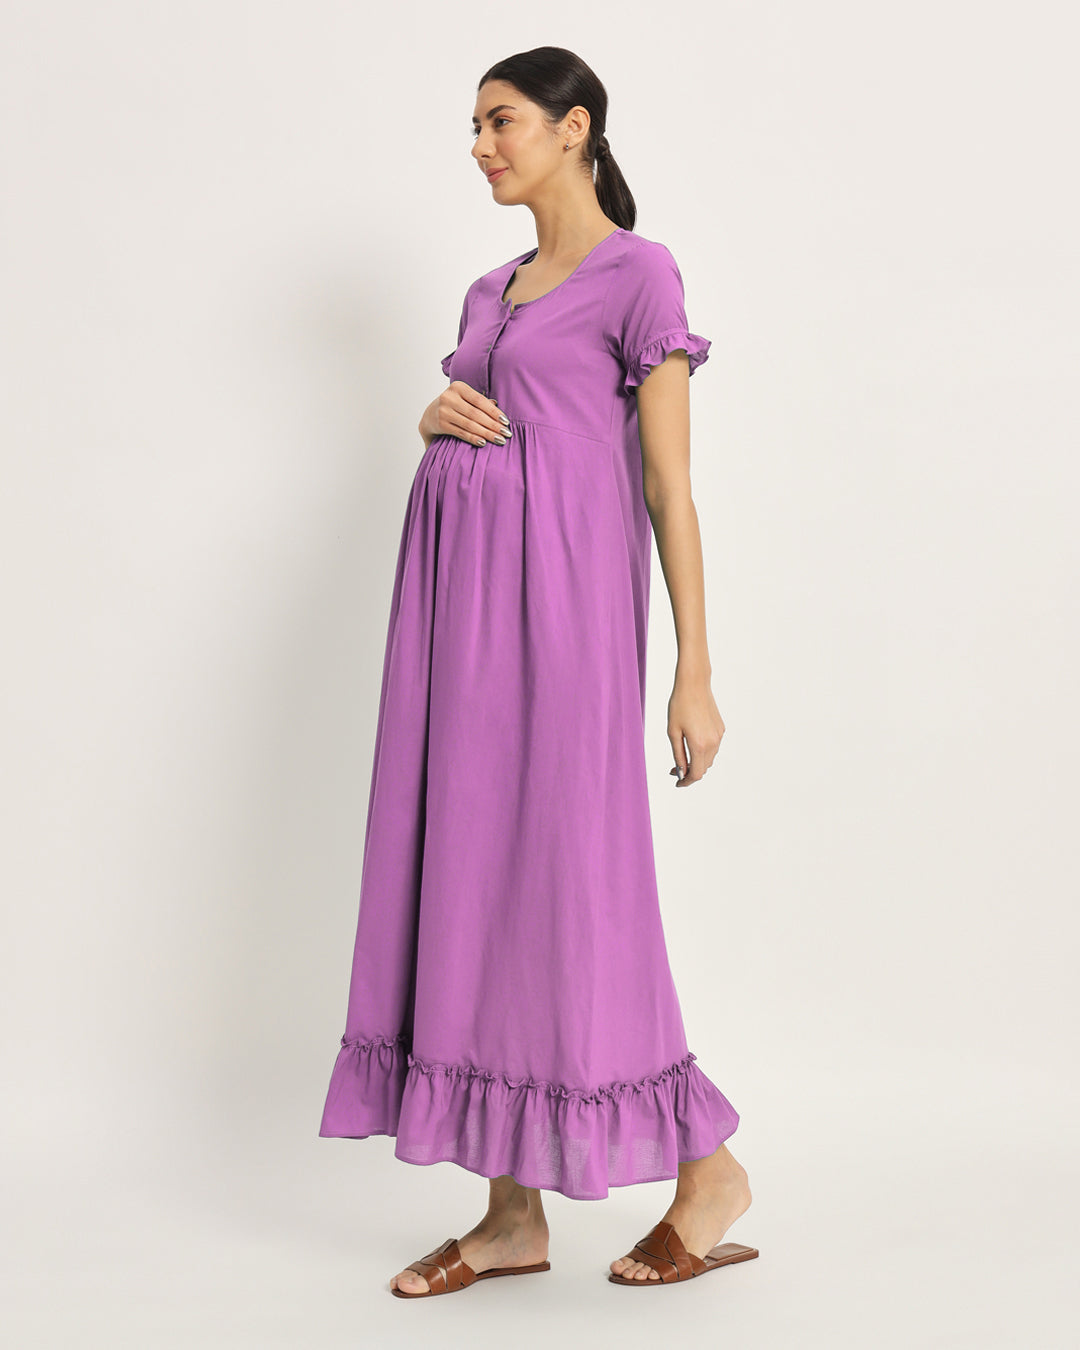 Combo: Sage Green & Wisteria Purple Bumpin' & Stylin' Maternity & Nursing Dress - Set of 2